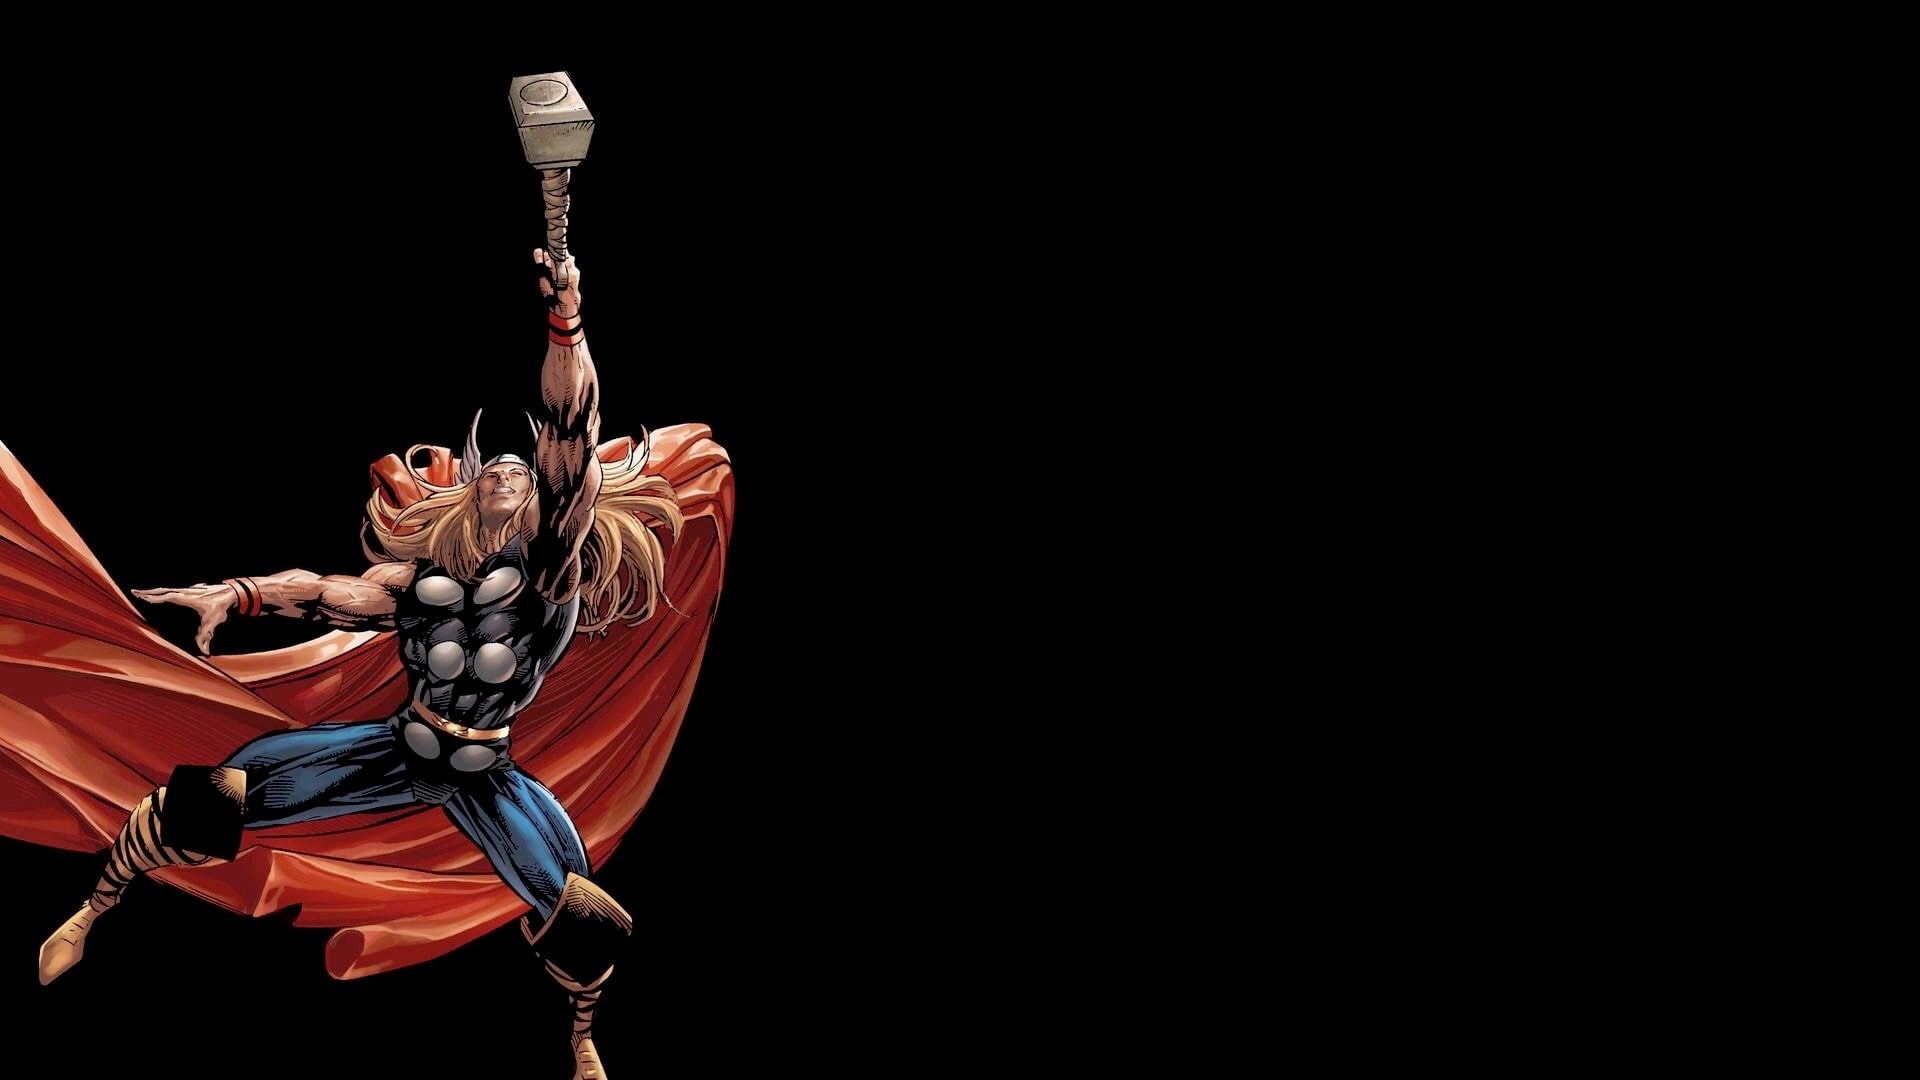 HD Wallpaper Thor Marvel Ics Copy Space Black Background